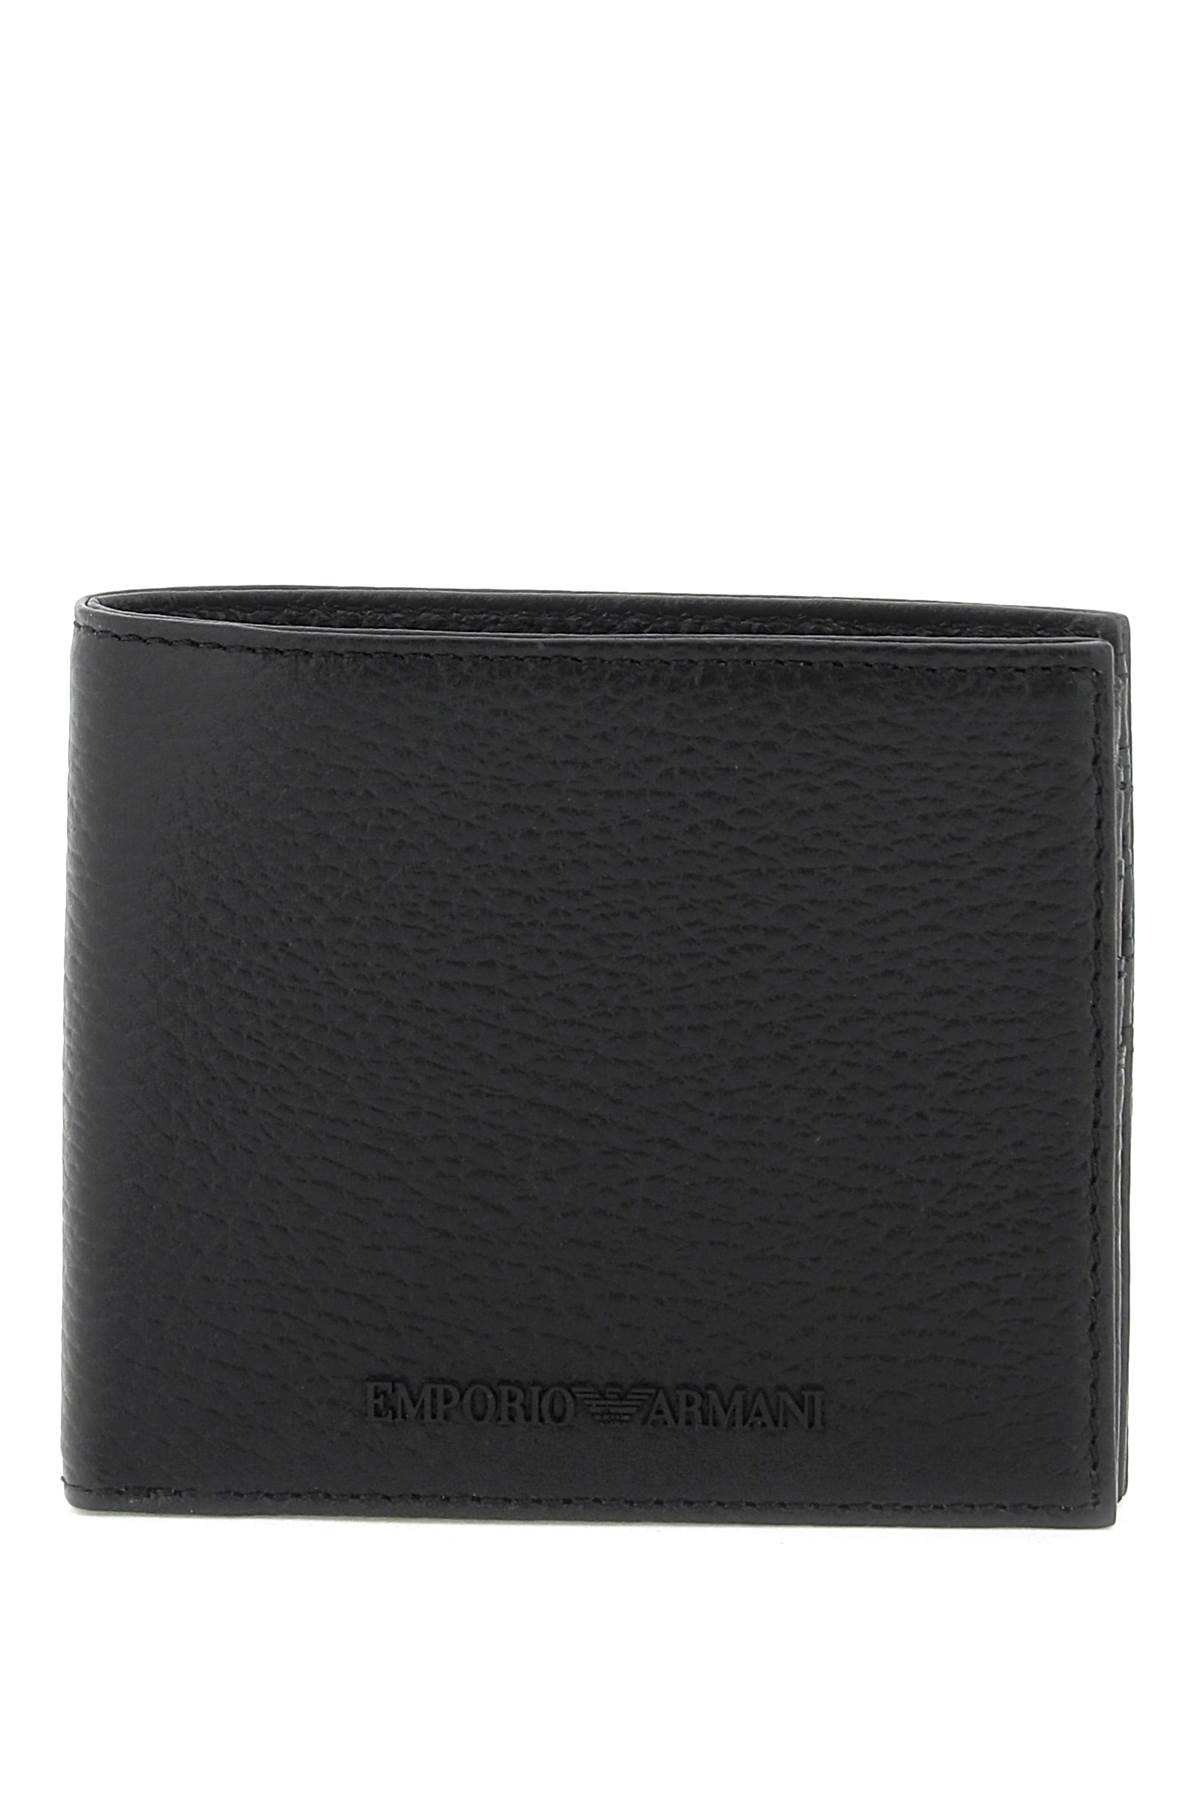 Emporio Armani Grained Leather Wallet In Black